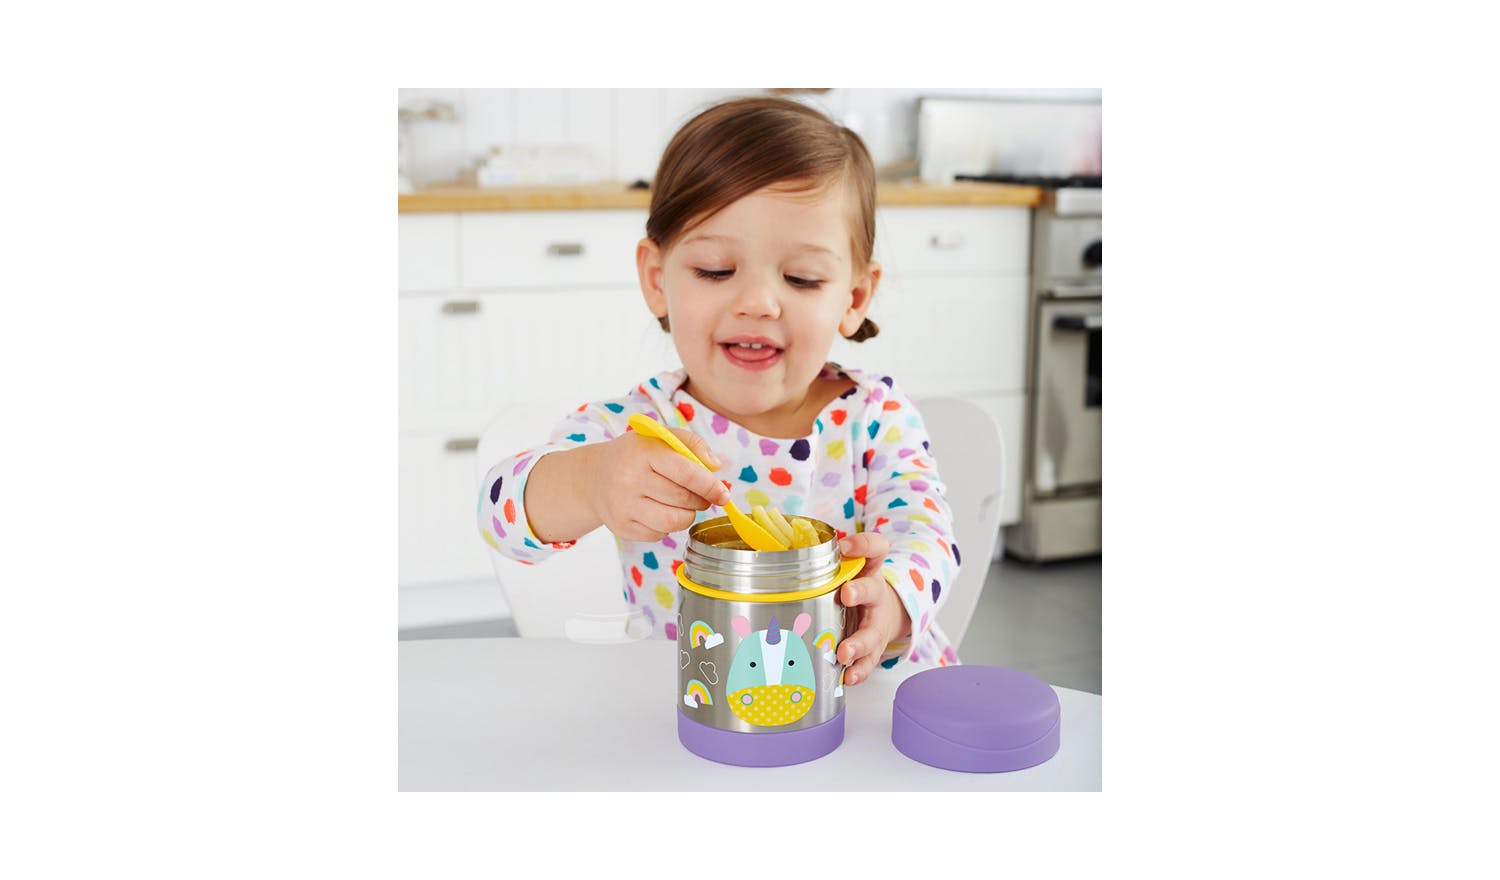 Skip Hop Insulated Baby Food Jar, Zoo, Unicorn